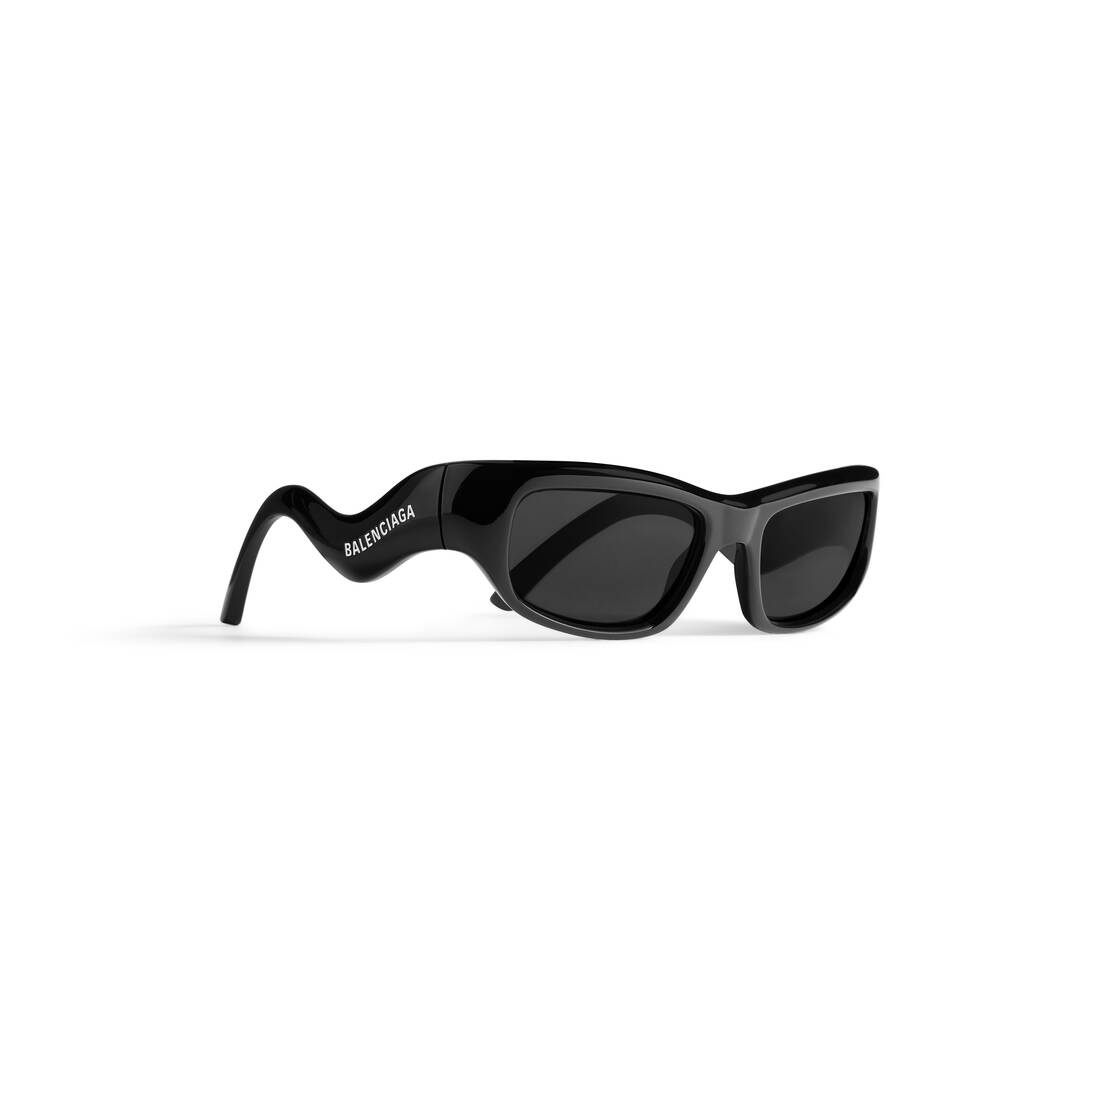 Hamptons Rectangle Sunglasses in Black - 2